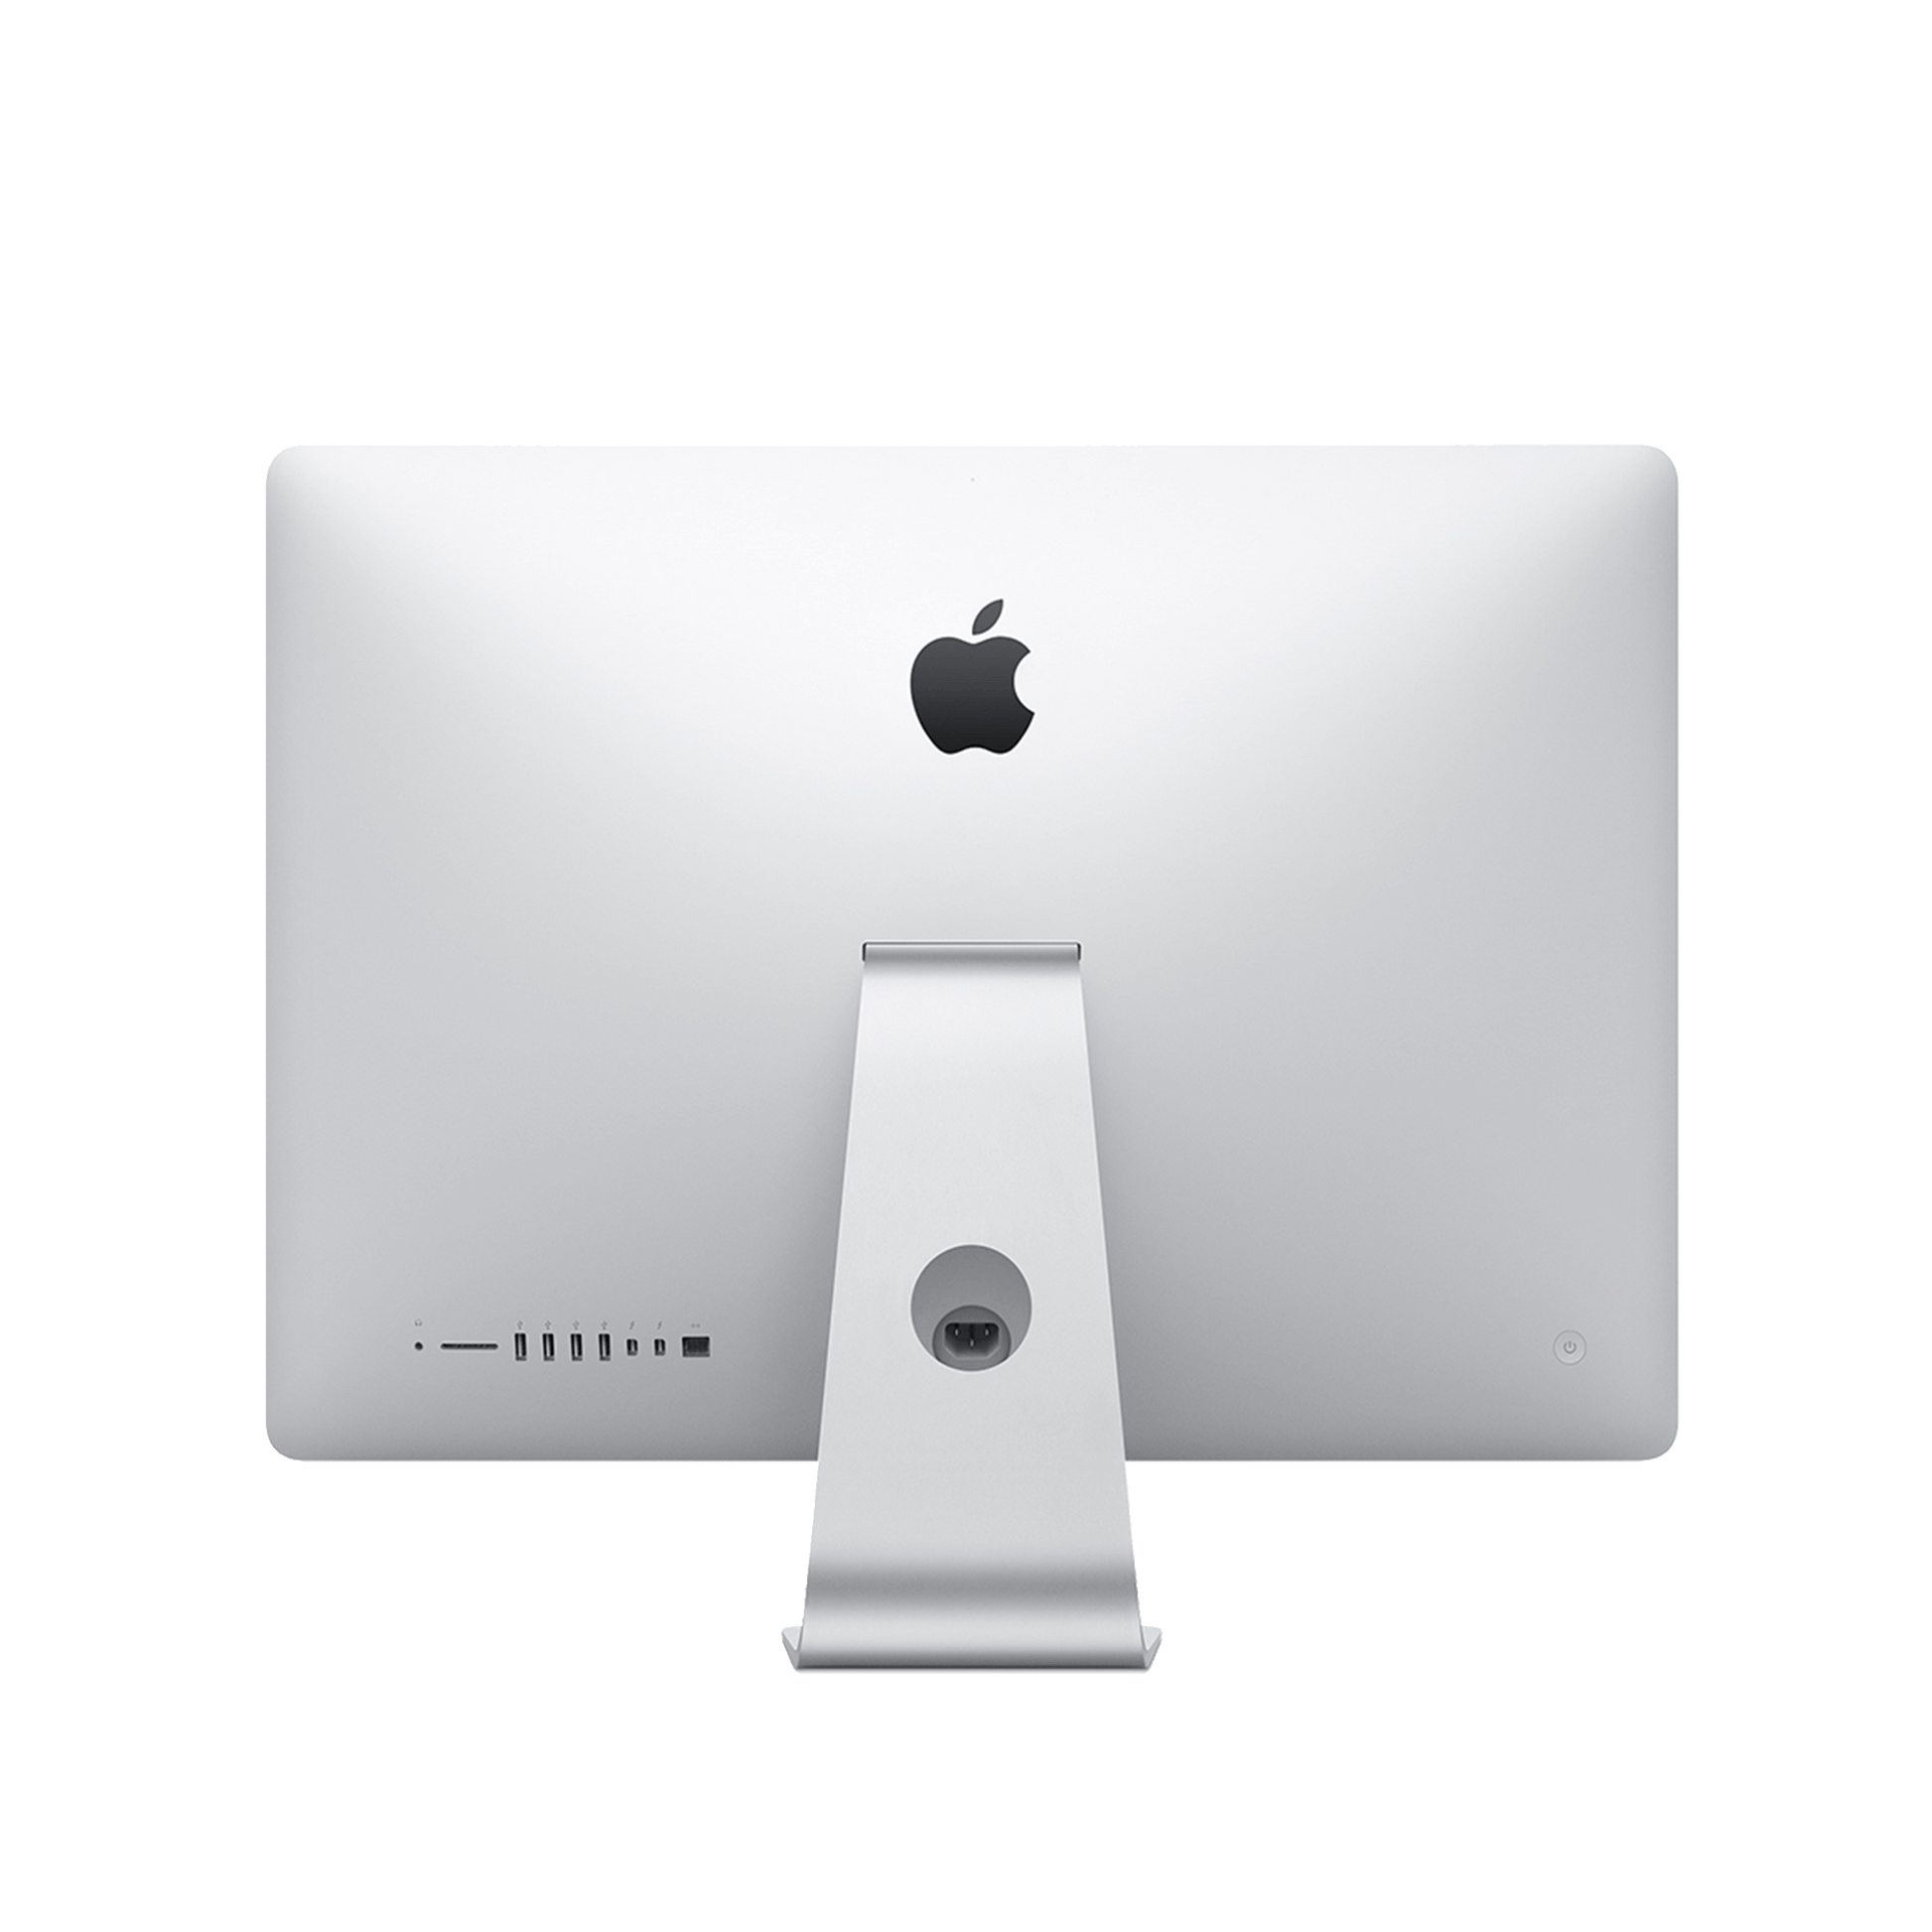 Refurbished iMac 21.5" Quad Core i5 2.7 8GB 1TB Fusion